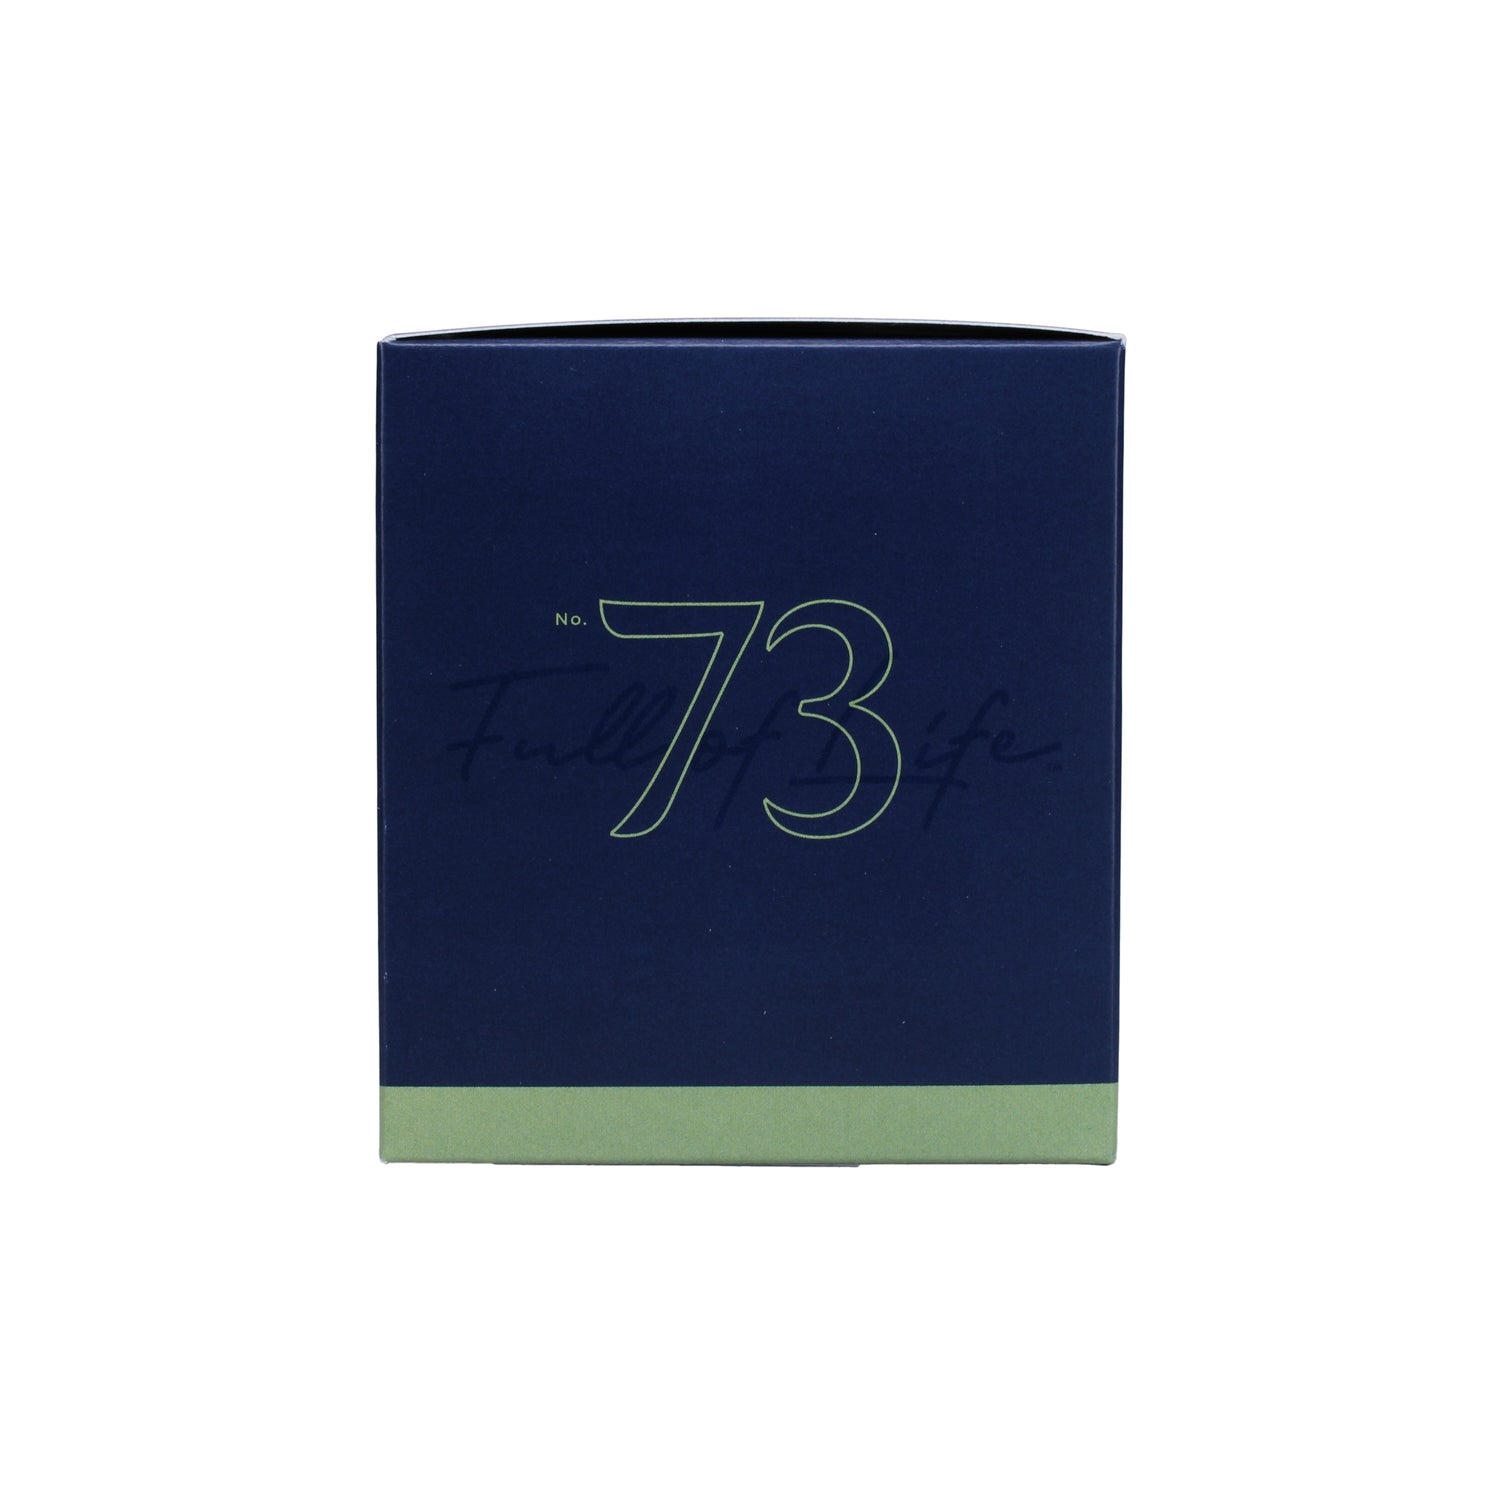 No. 73 Vetiver Seagrass 7 oz. Candle in Signature Box Image 6